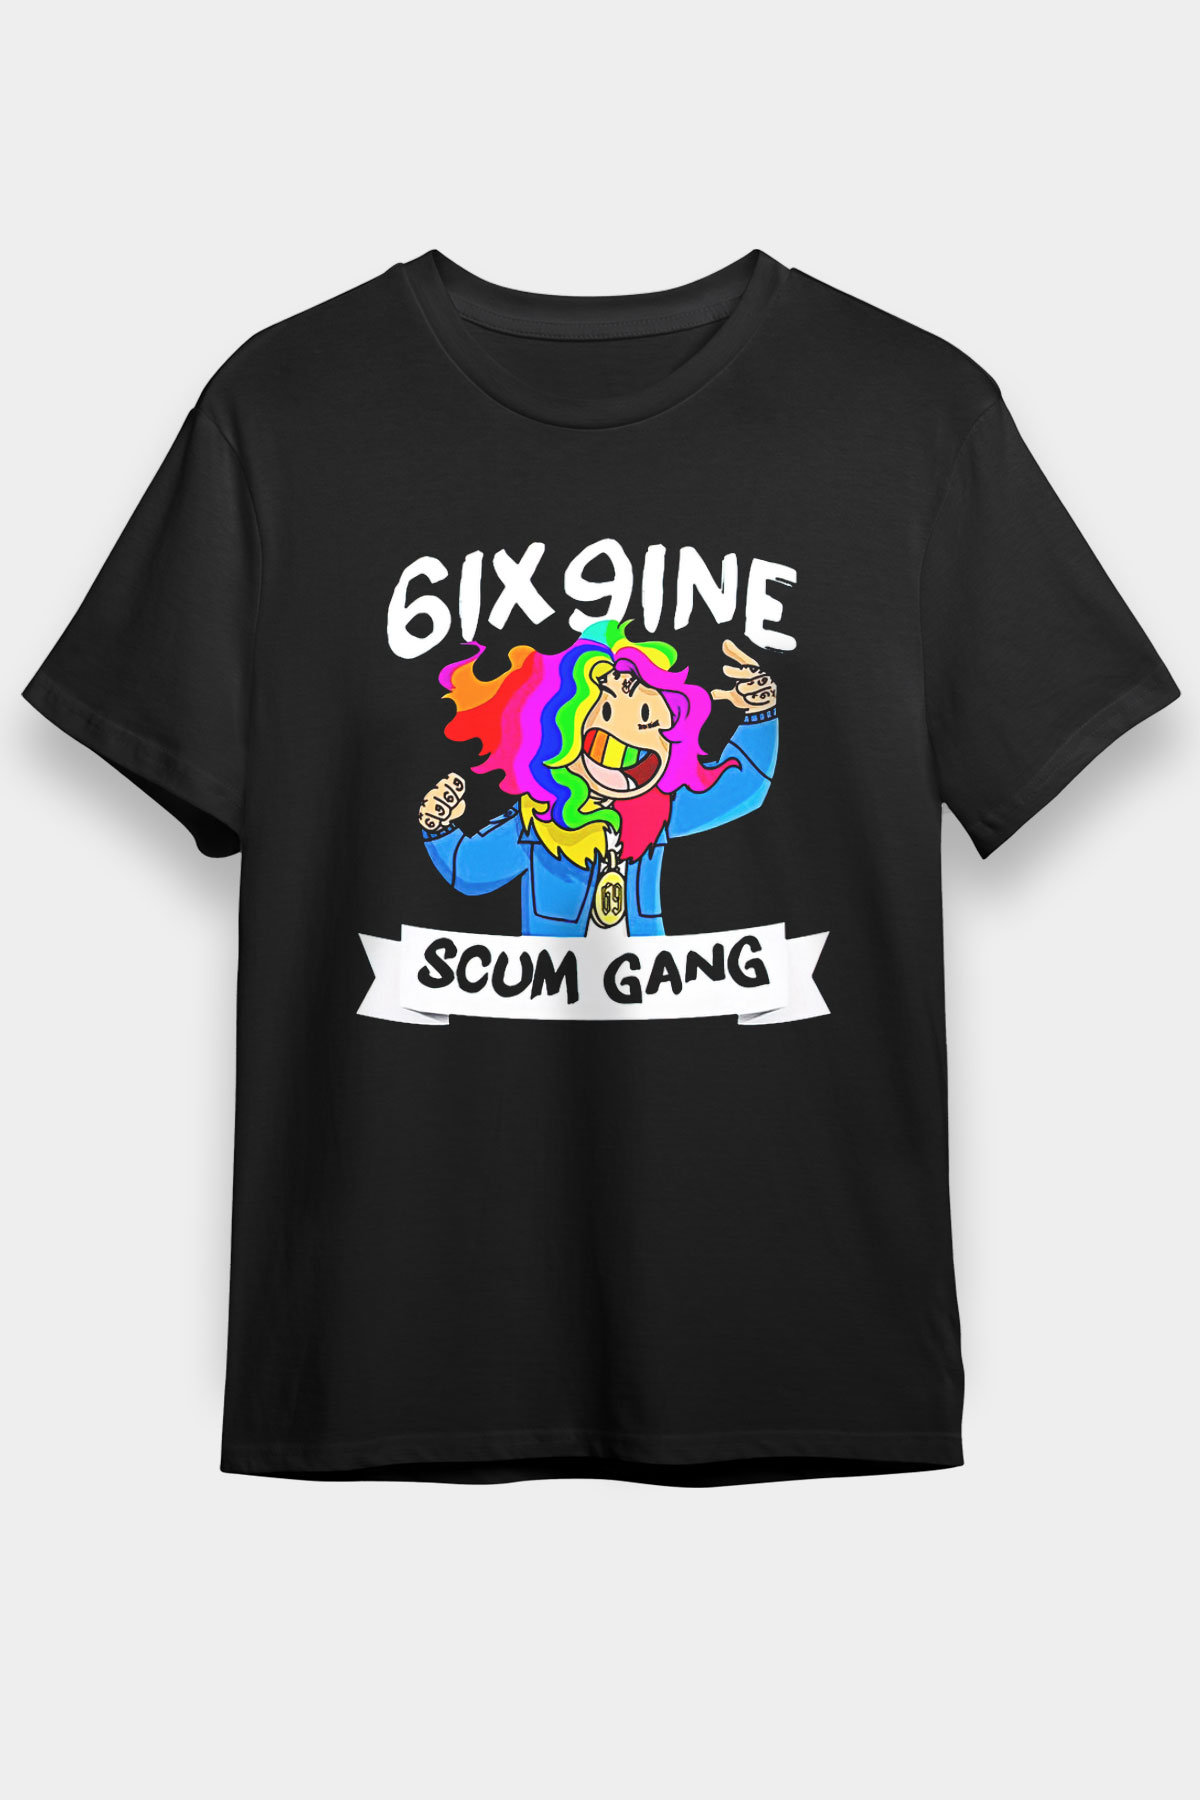 6ix9ine T shirt,Hip Hop,Rap Tshirt 02